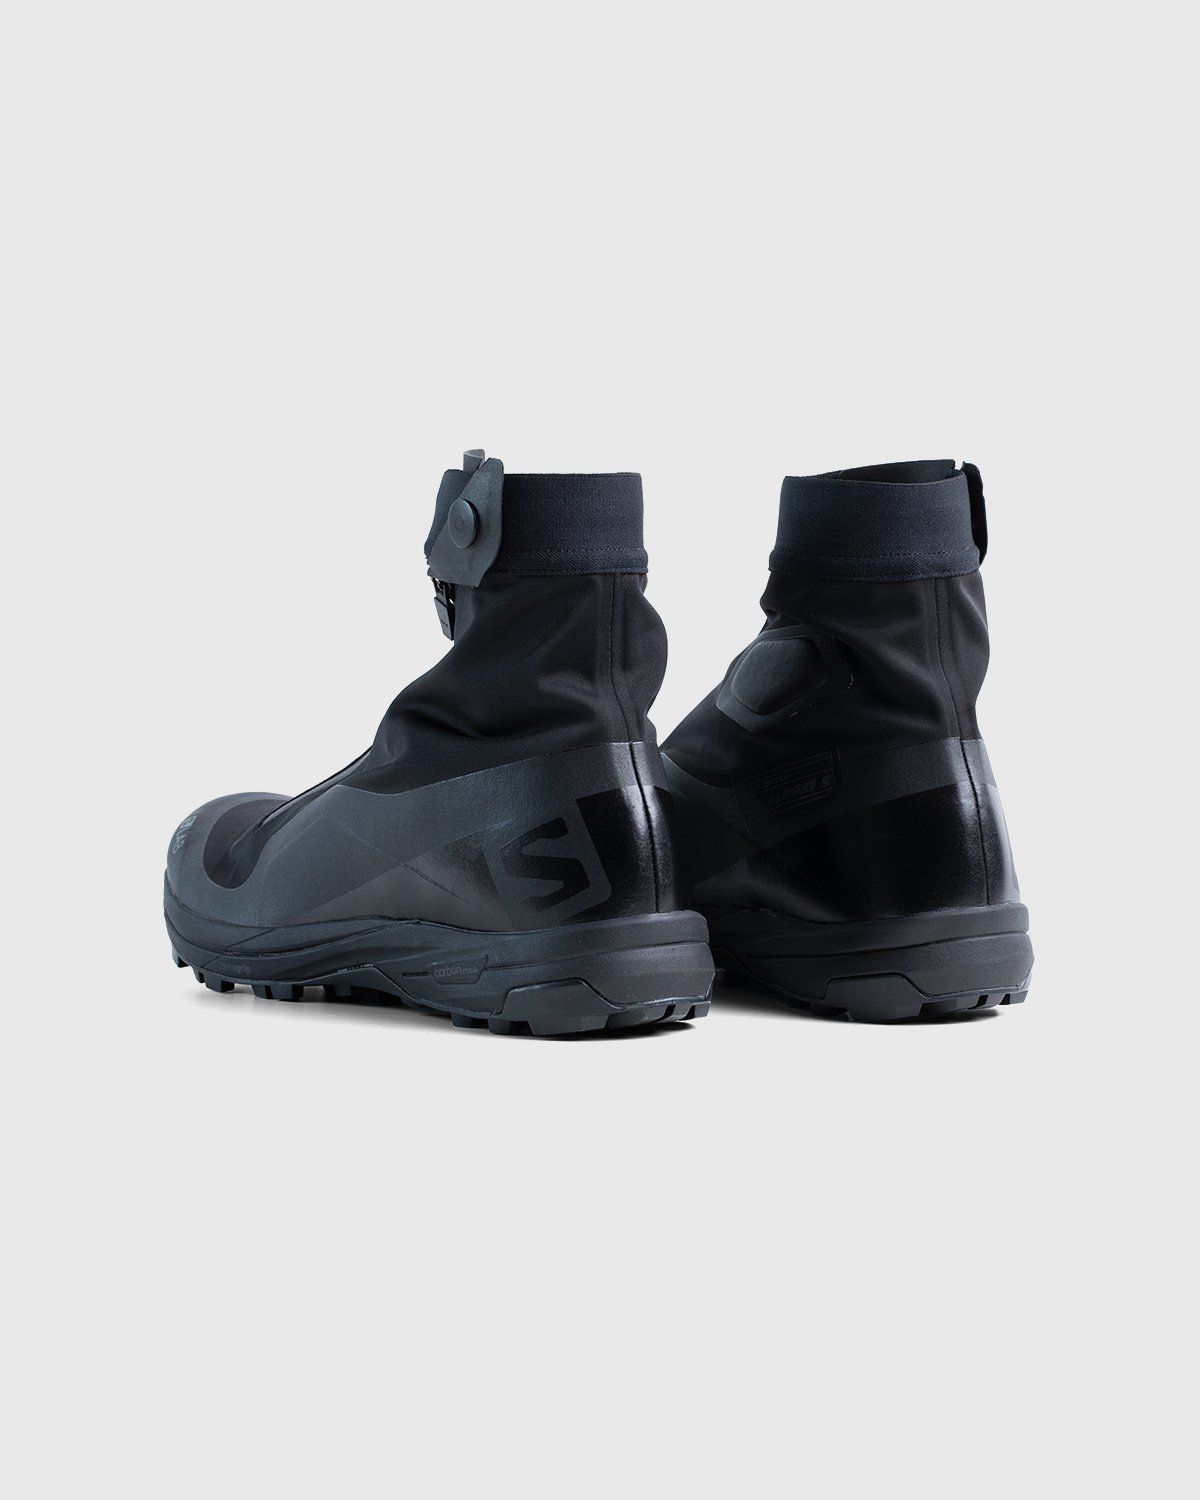 Salomon – S/Lab XA-Alpine 2 Limited Edition Black - Hiking Boots - Black - Image 3